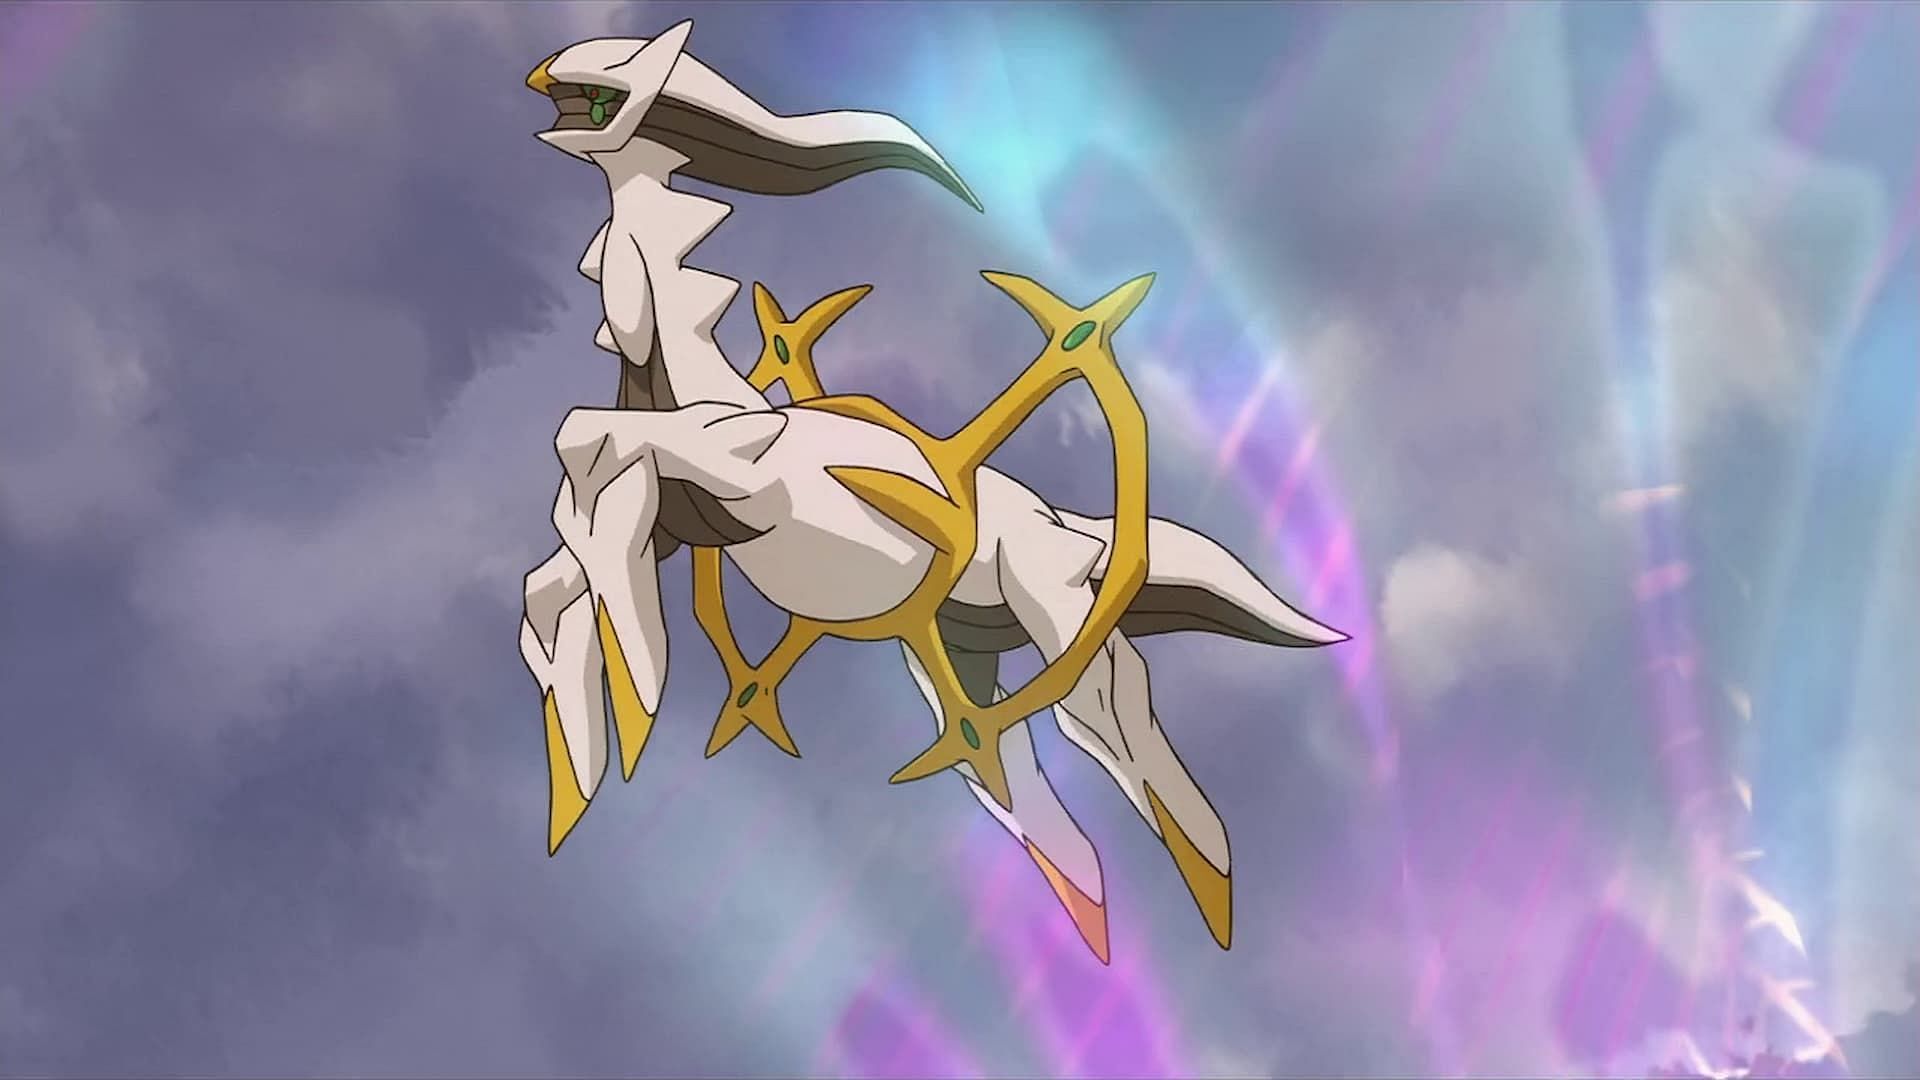 Arceus - Normal type (Image via The Pokemon Company)